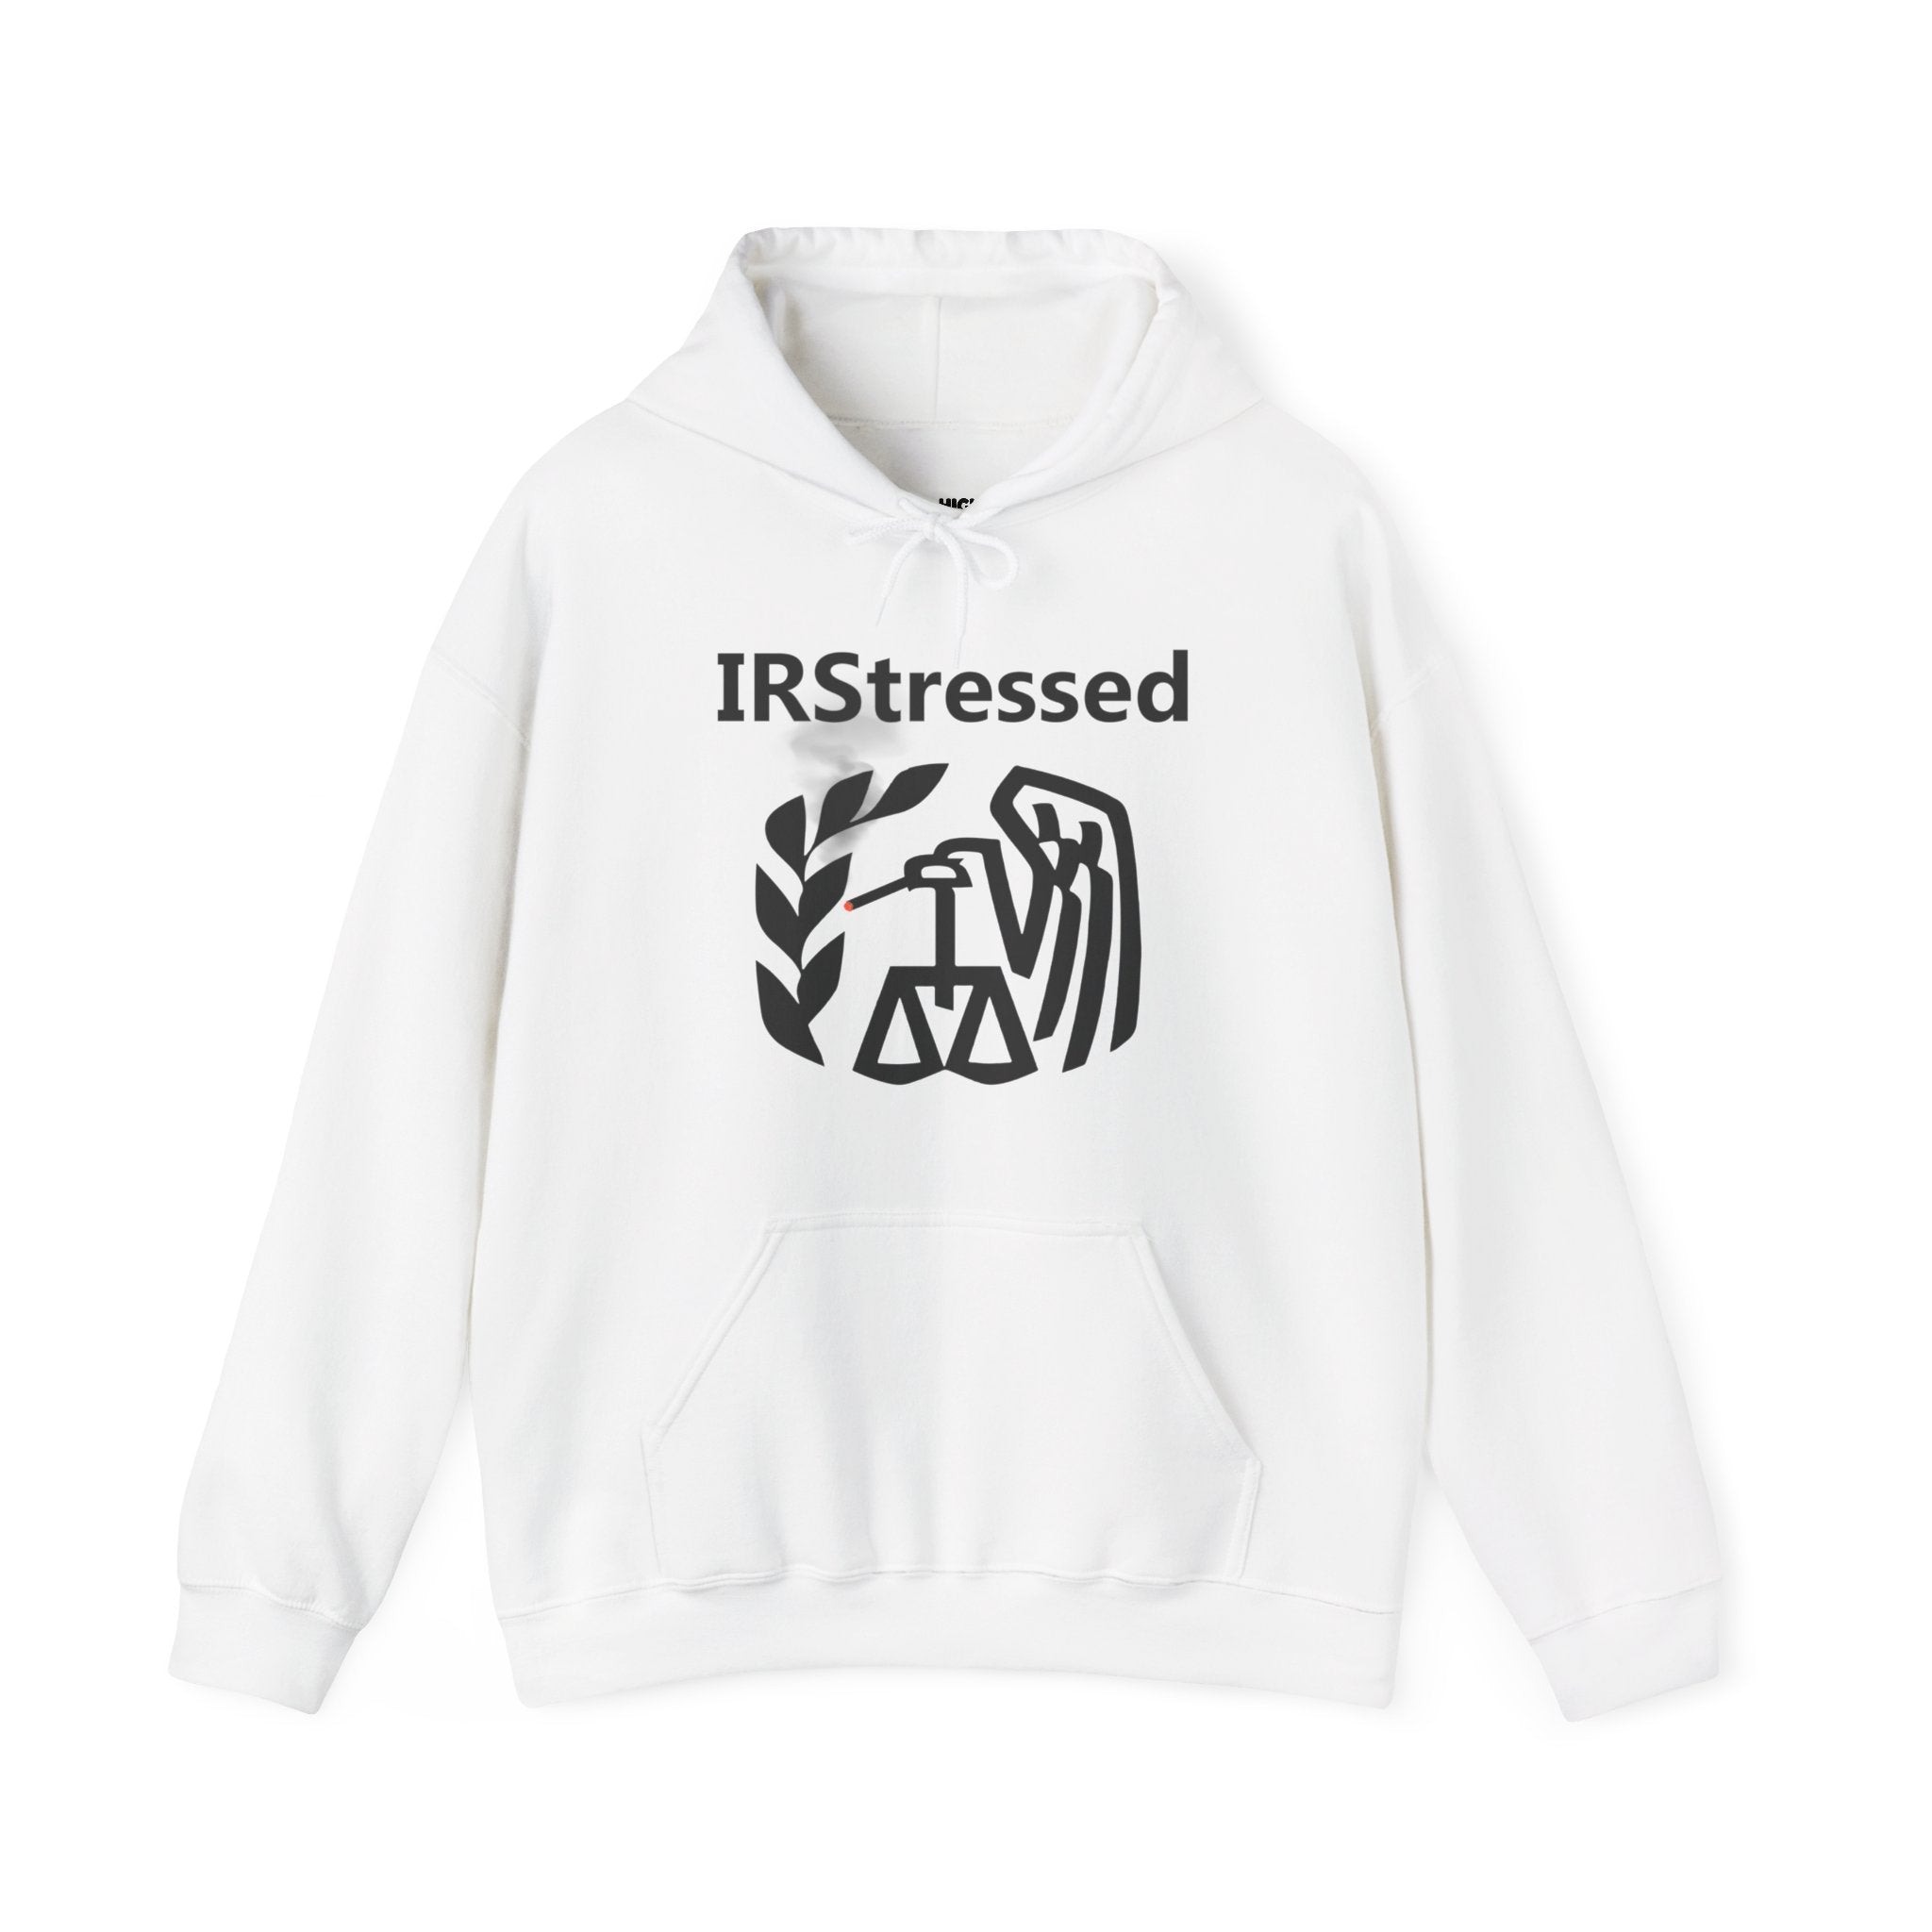 IRS Stressed